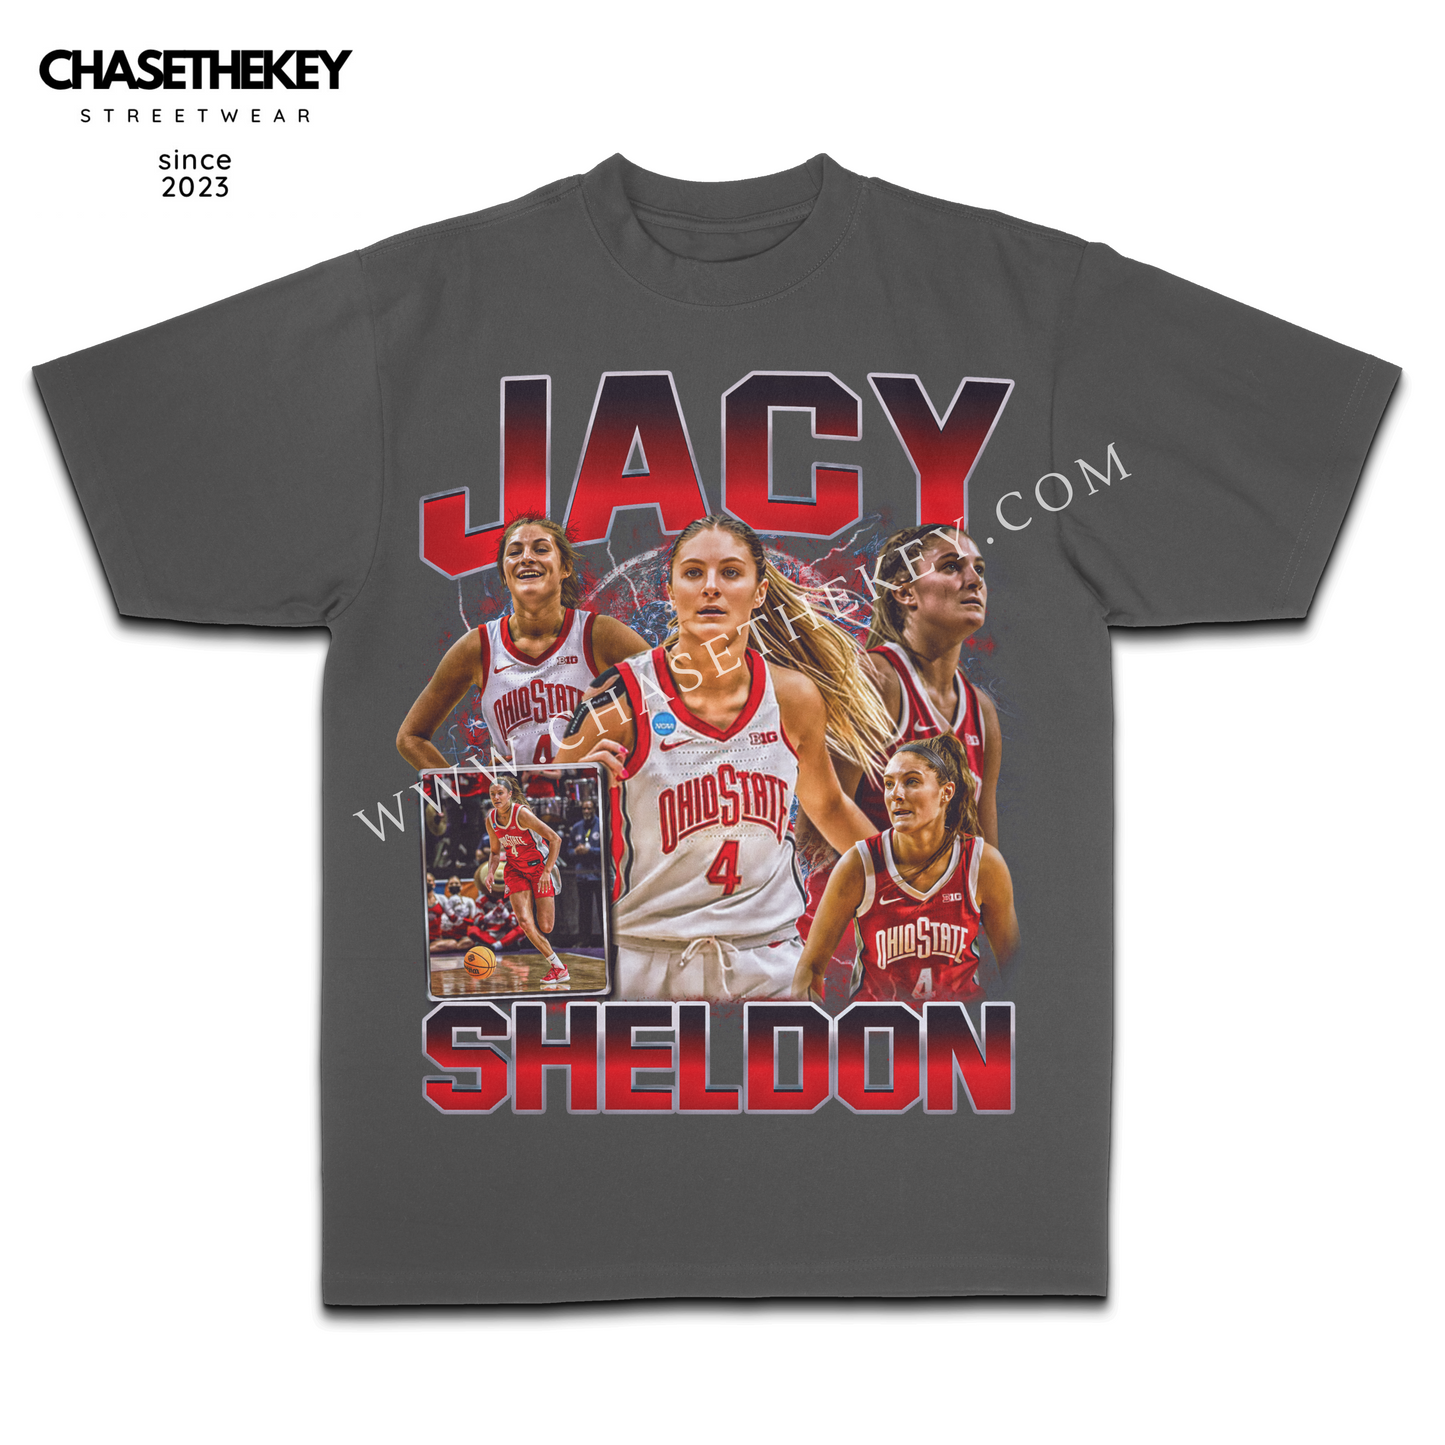 Jacy Sheldon Shirt